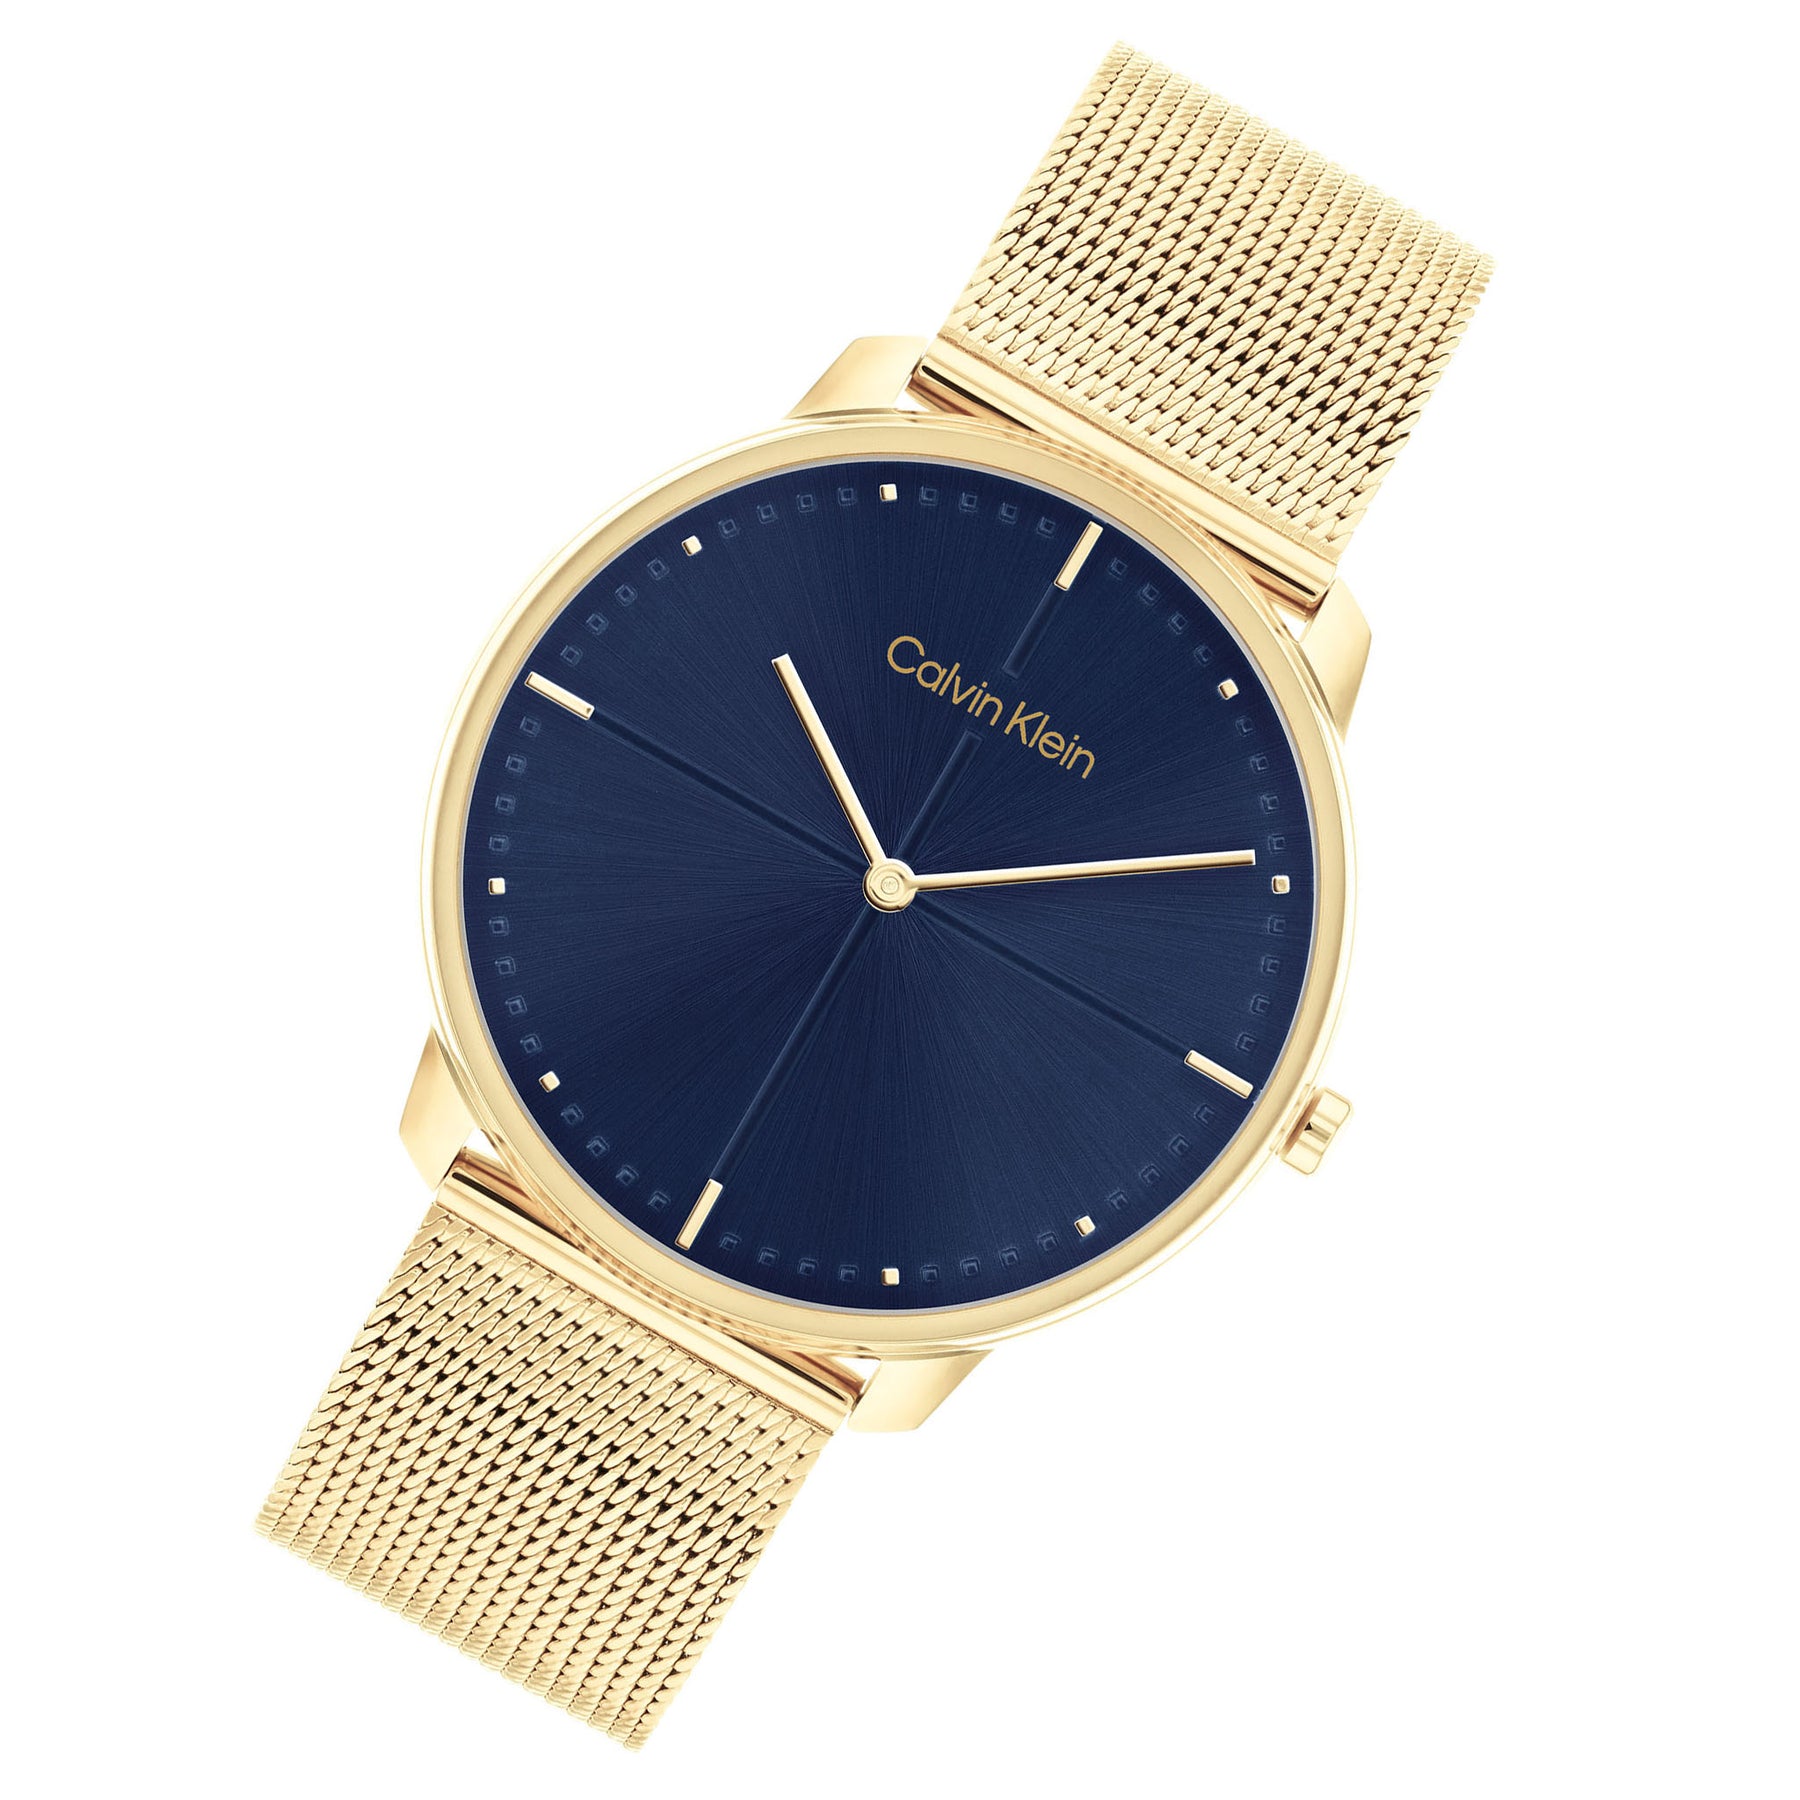 Calvin Klein Gold Mesh Blue – Watch Australia Factory Unisex - 25200153 Dial Watch The